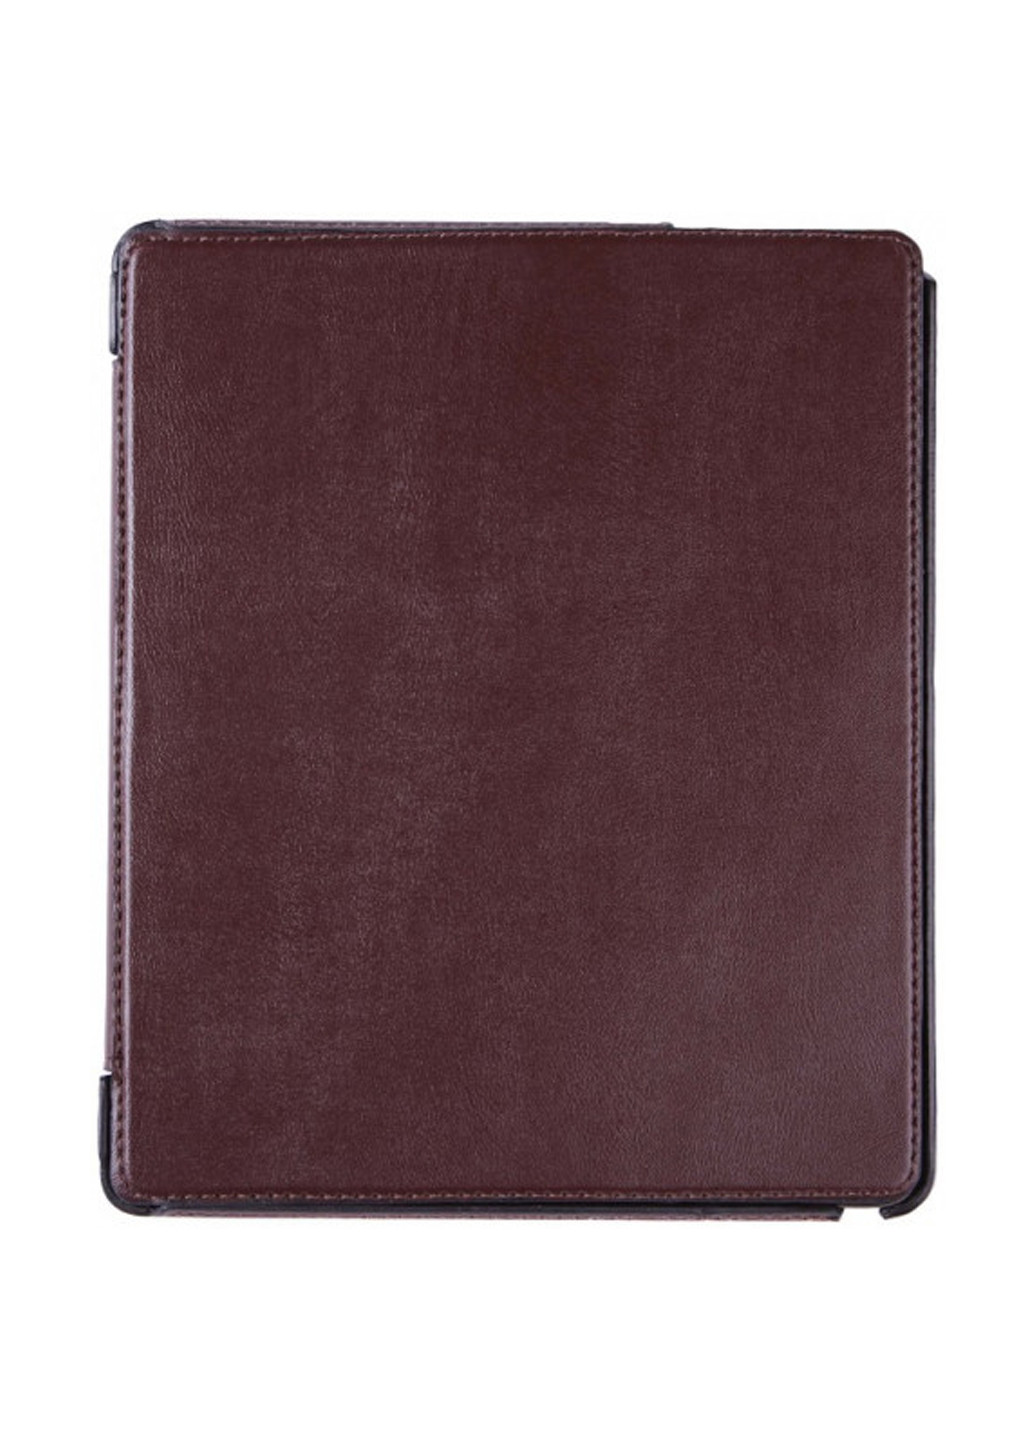 Чехол Premium для PocketBook 840 brown (4821784622004) Airon premium для электронной книги pocketbook 840 brown (4821784622004) (158554737)